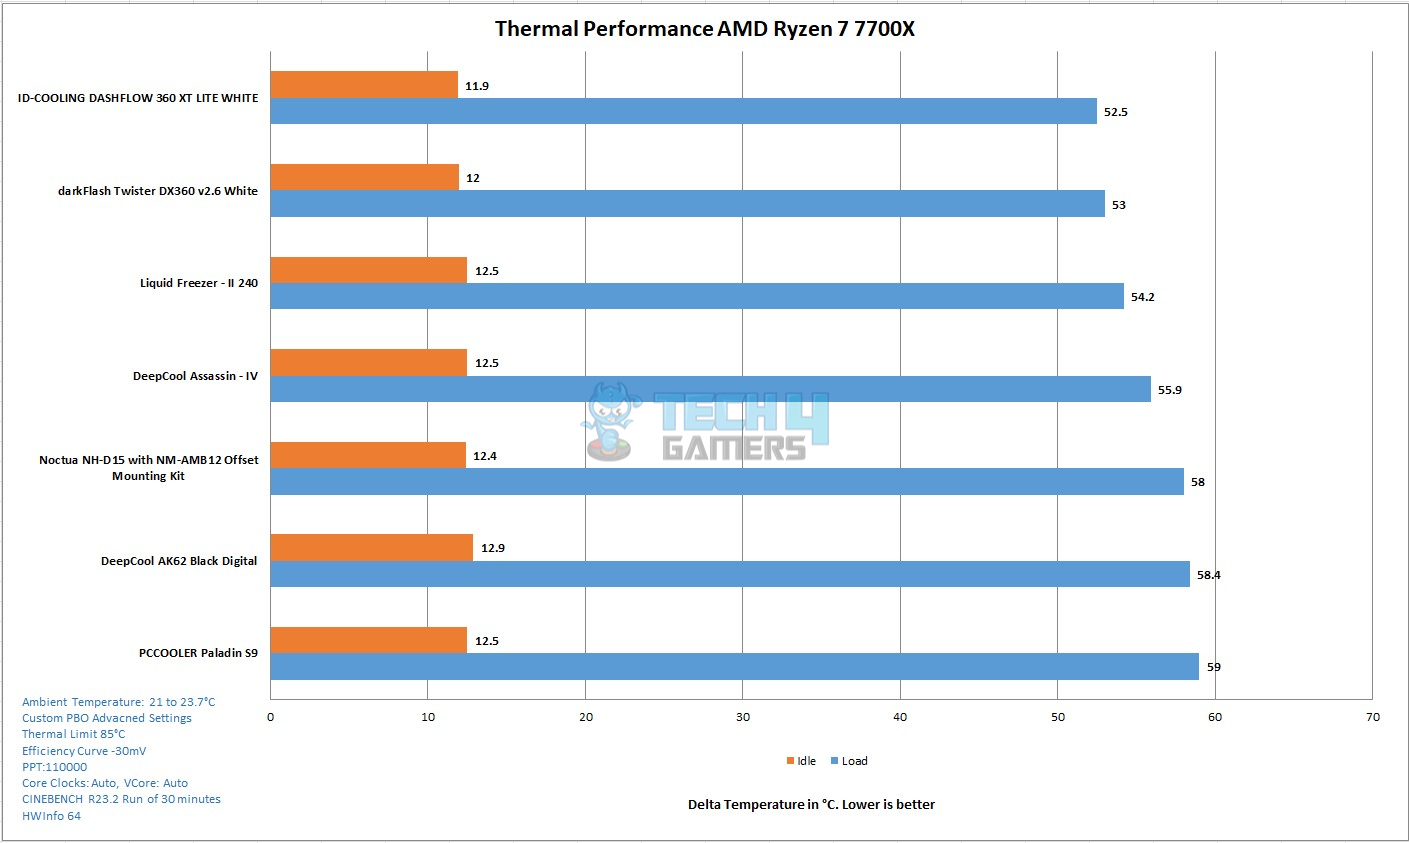 DeepCool Assassin IV CPU Air Cooler — Thermal Performance